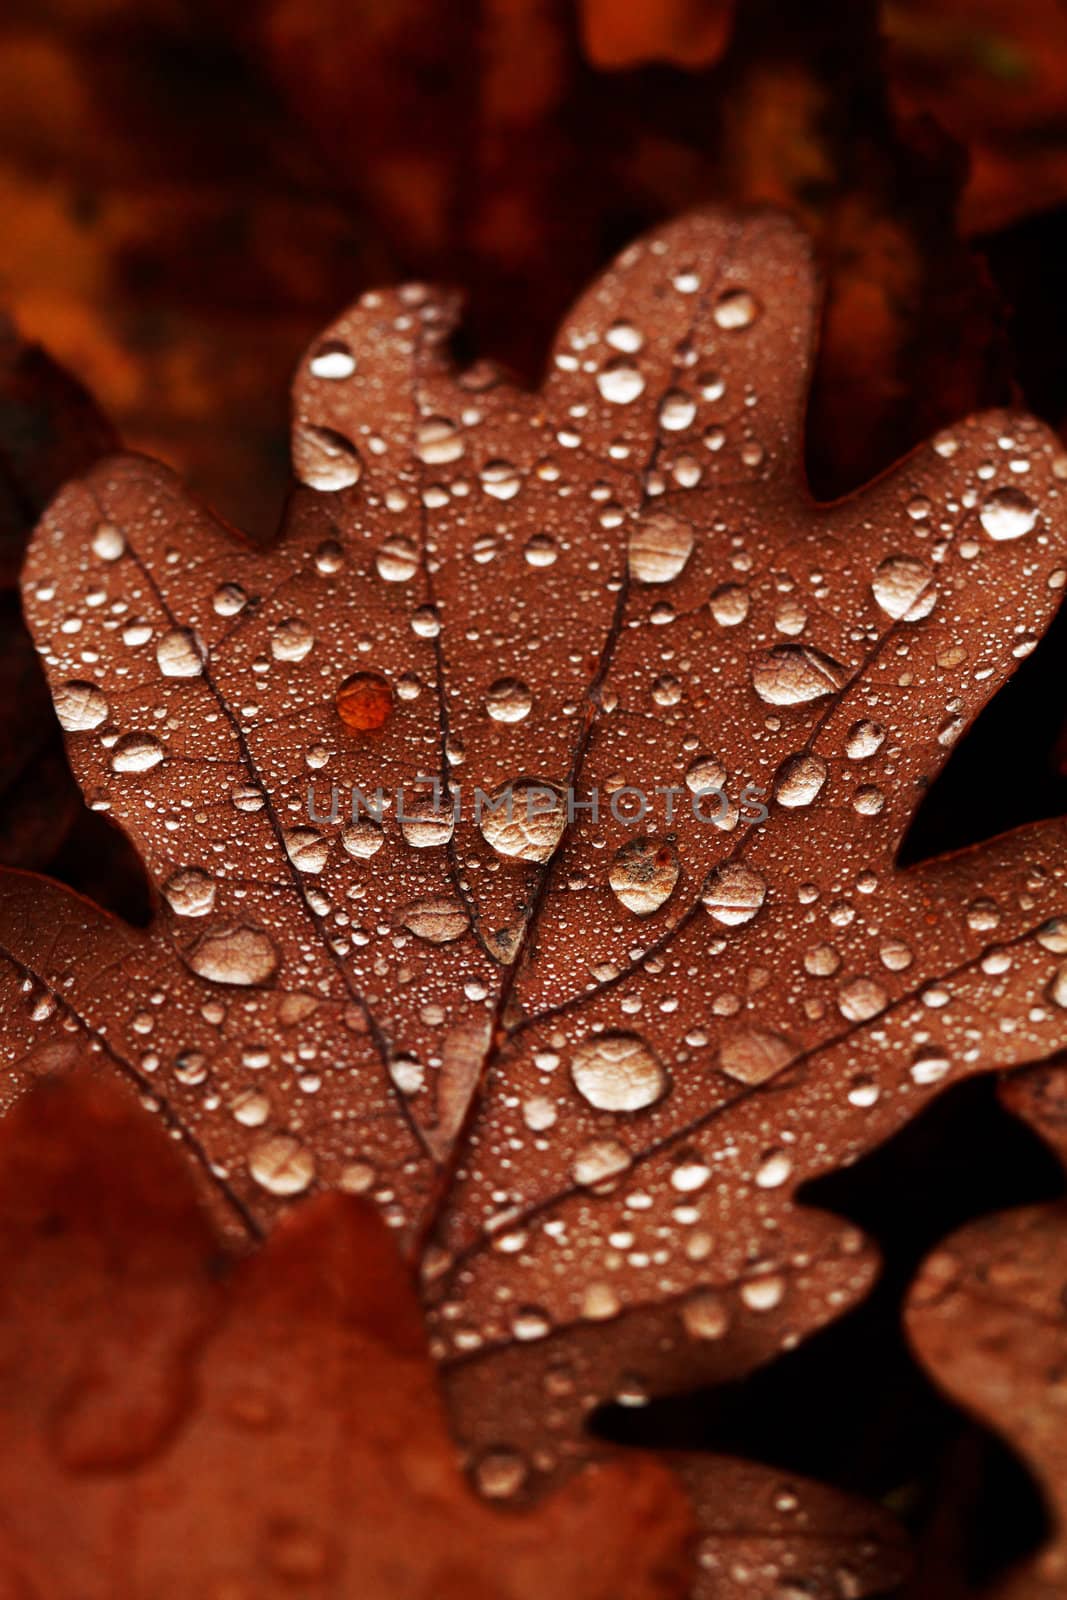 Dewdrops on the dry leaf macro shot